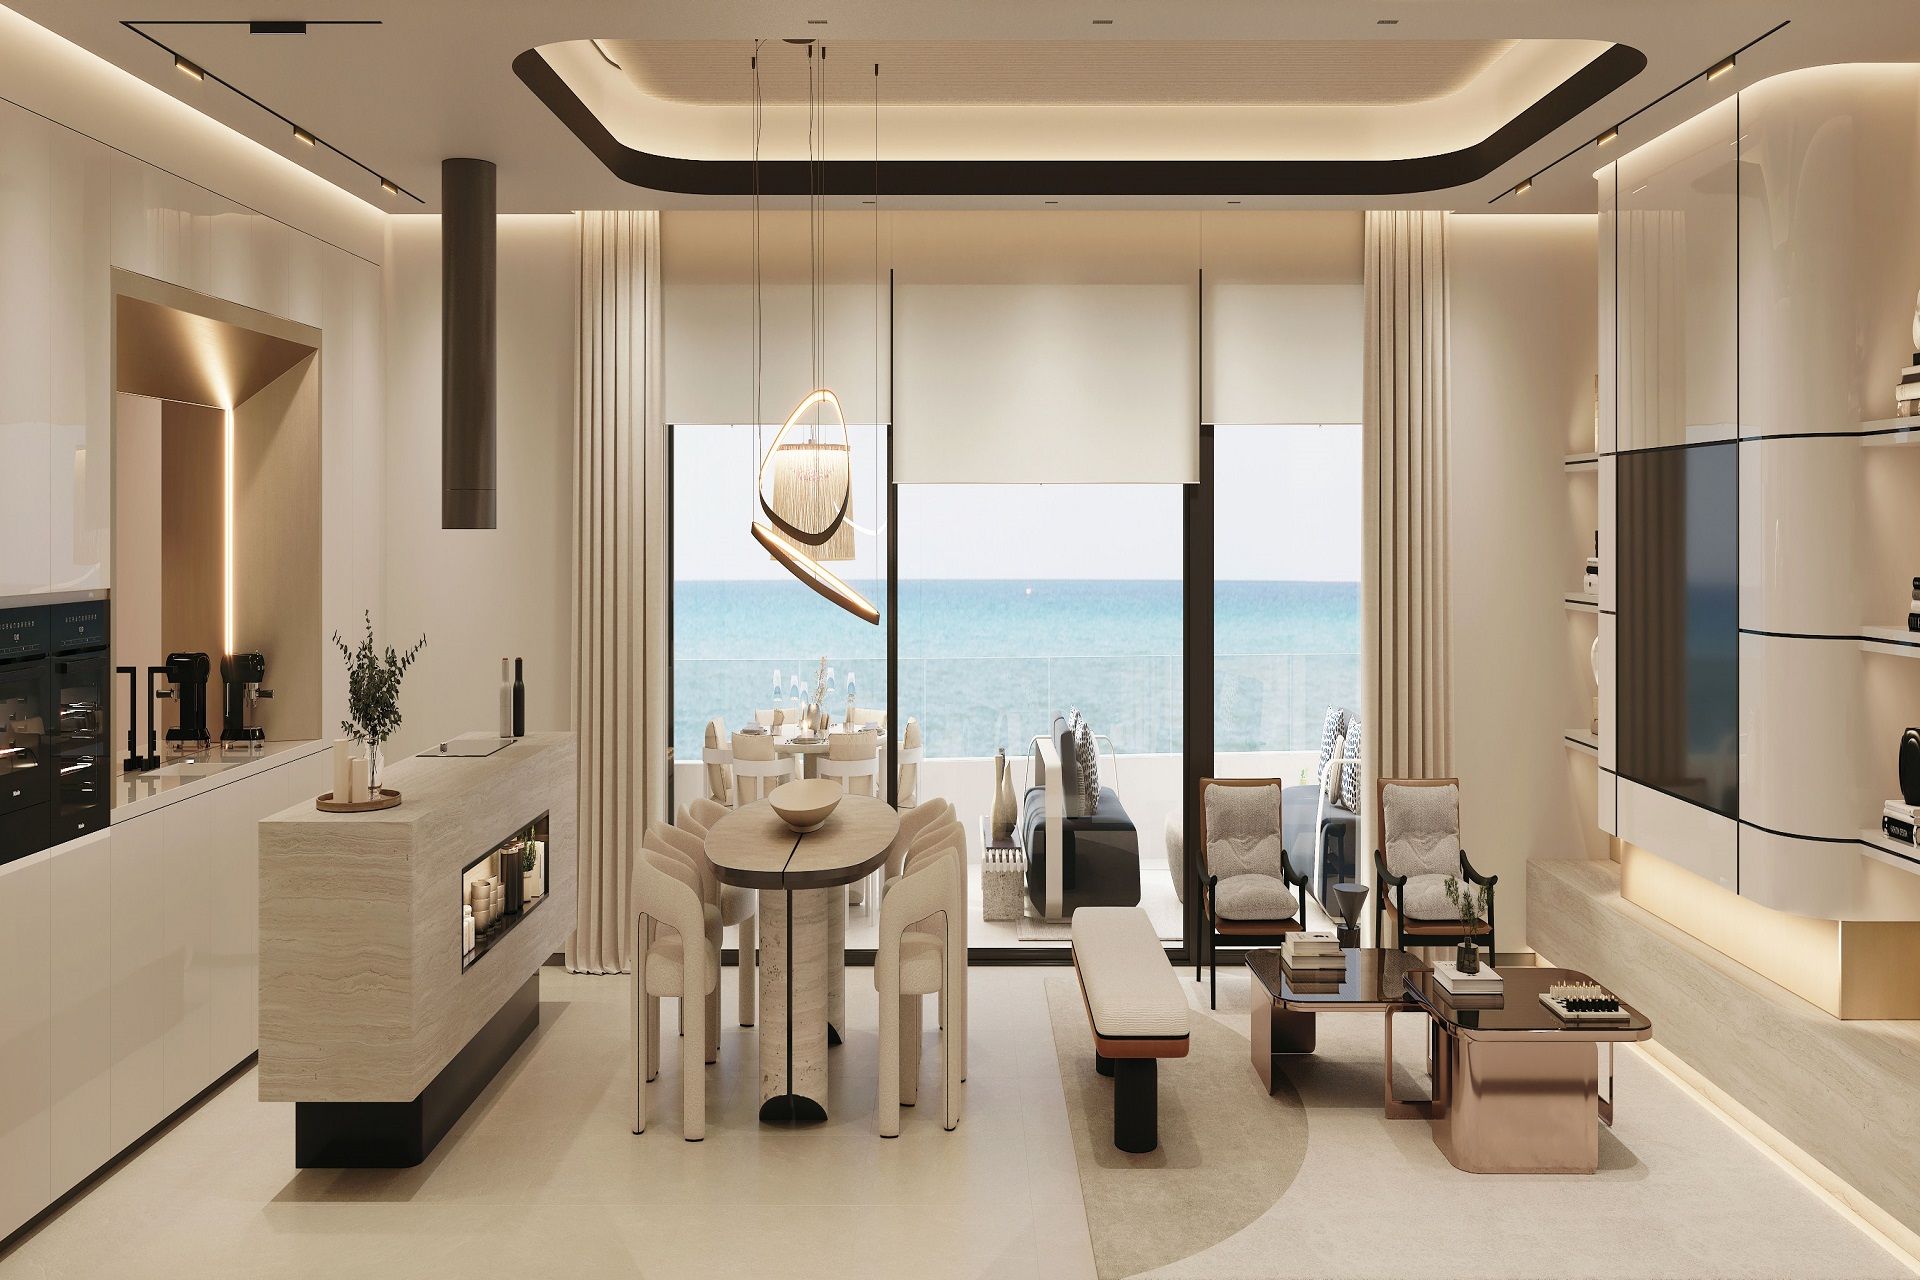 BEACHFRONT – Luxury ground floor apartment with private garden in a new frontline beach resort | Engel & Völkers Marbella